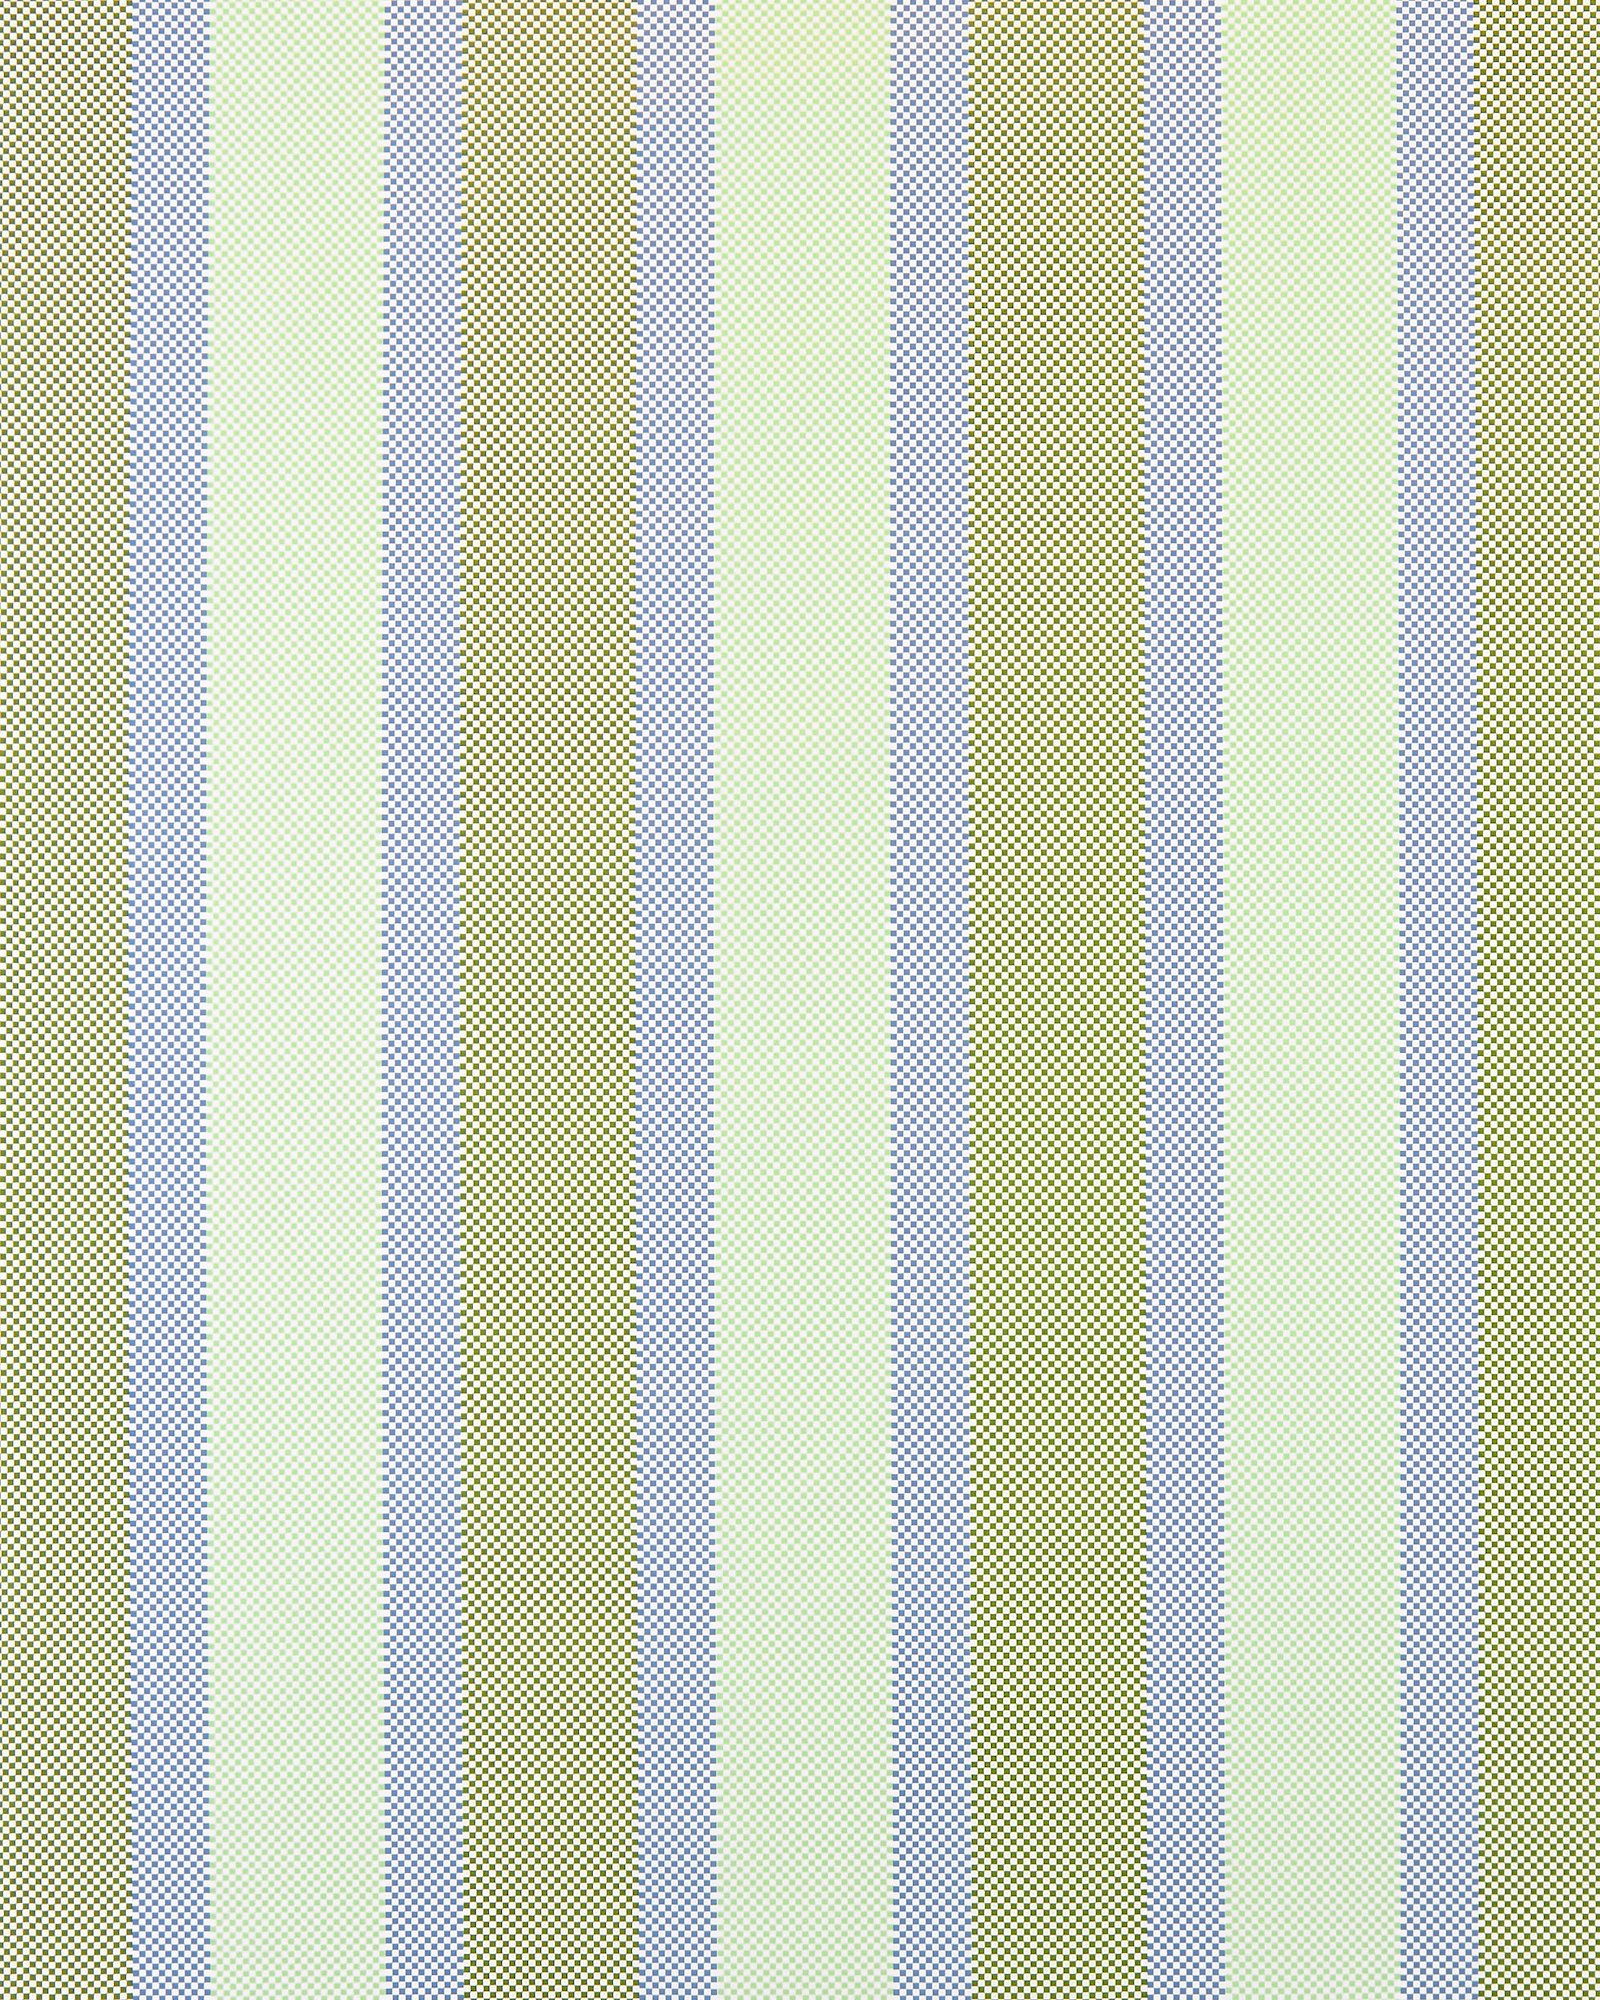 Non-woven oilcloth green/blue stripes 861733_pack_sp